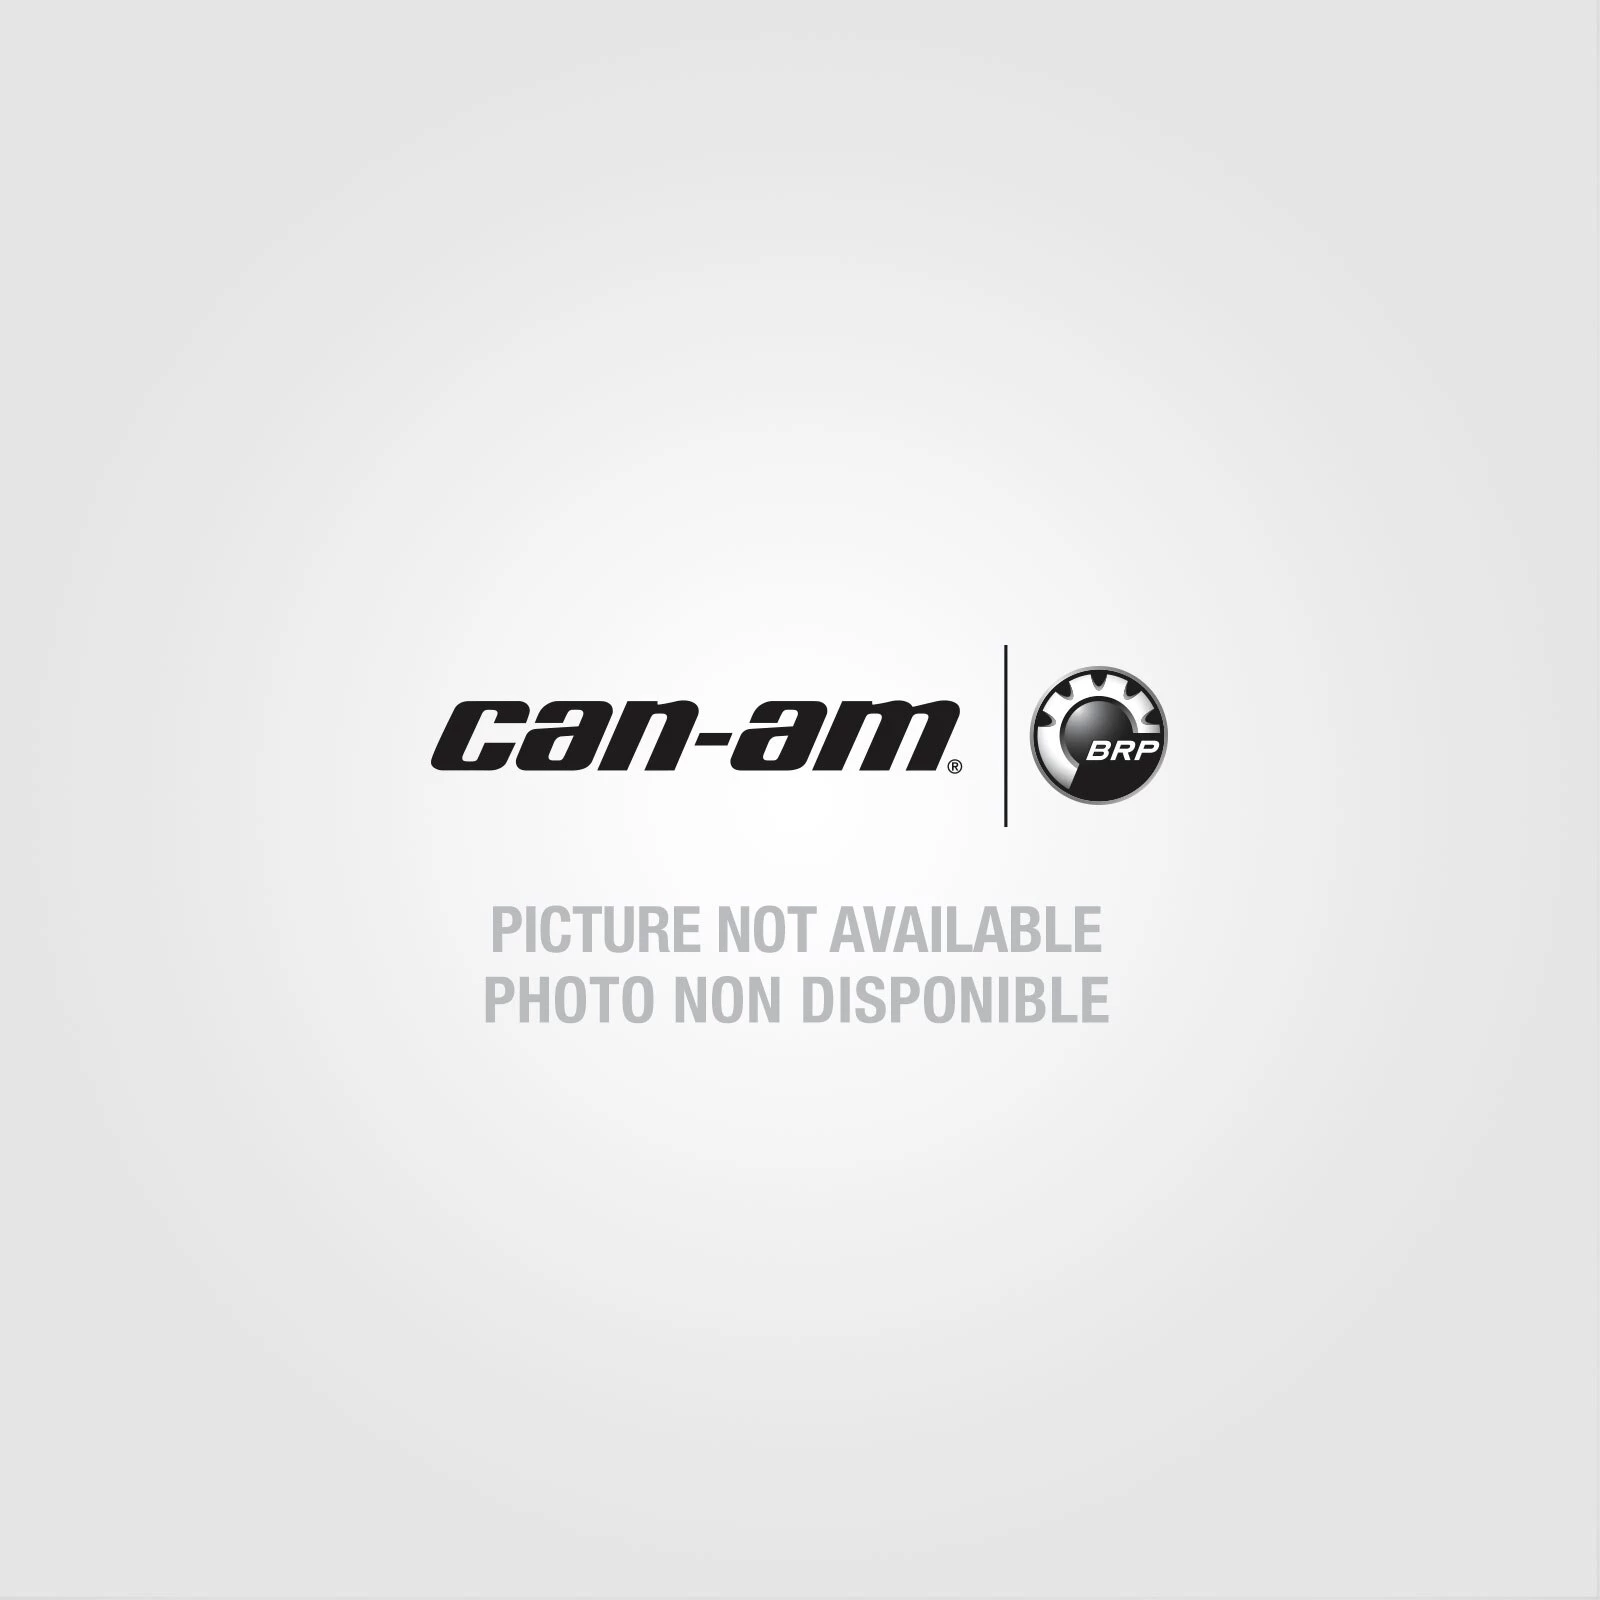 Can-am Bombardier Top Case Speakers Amplifier Kit